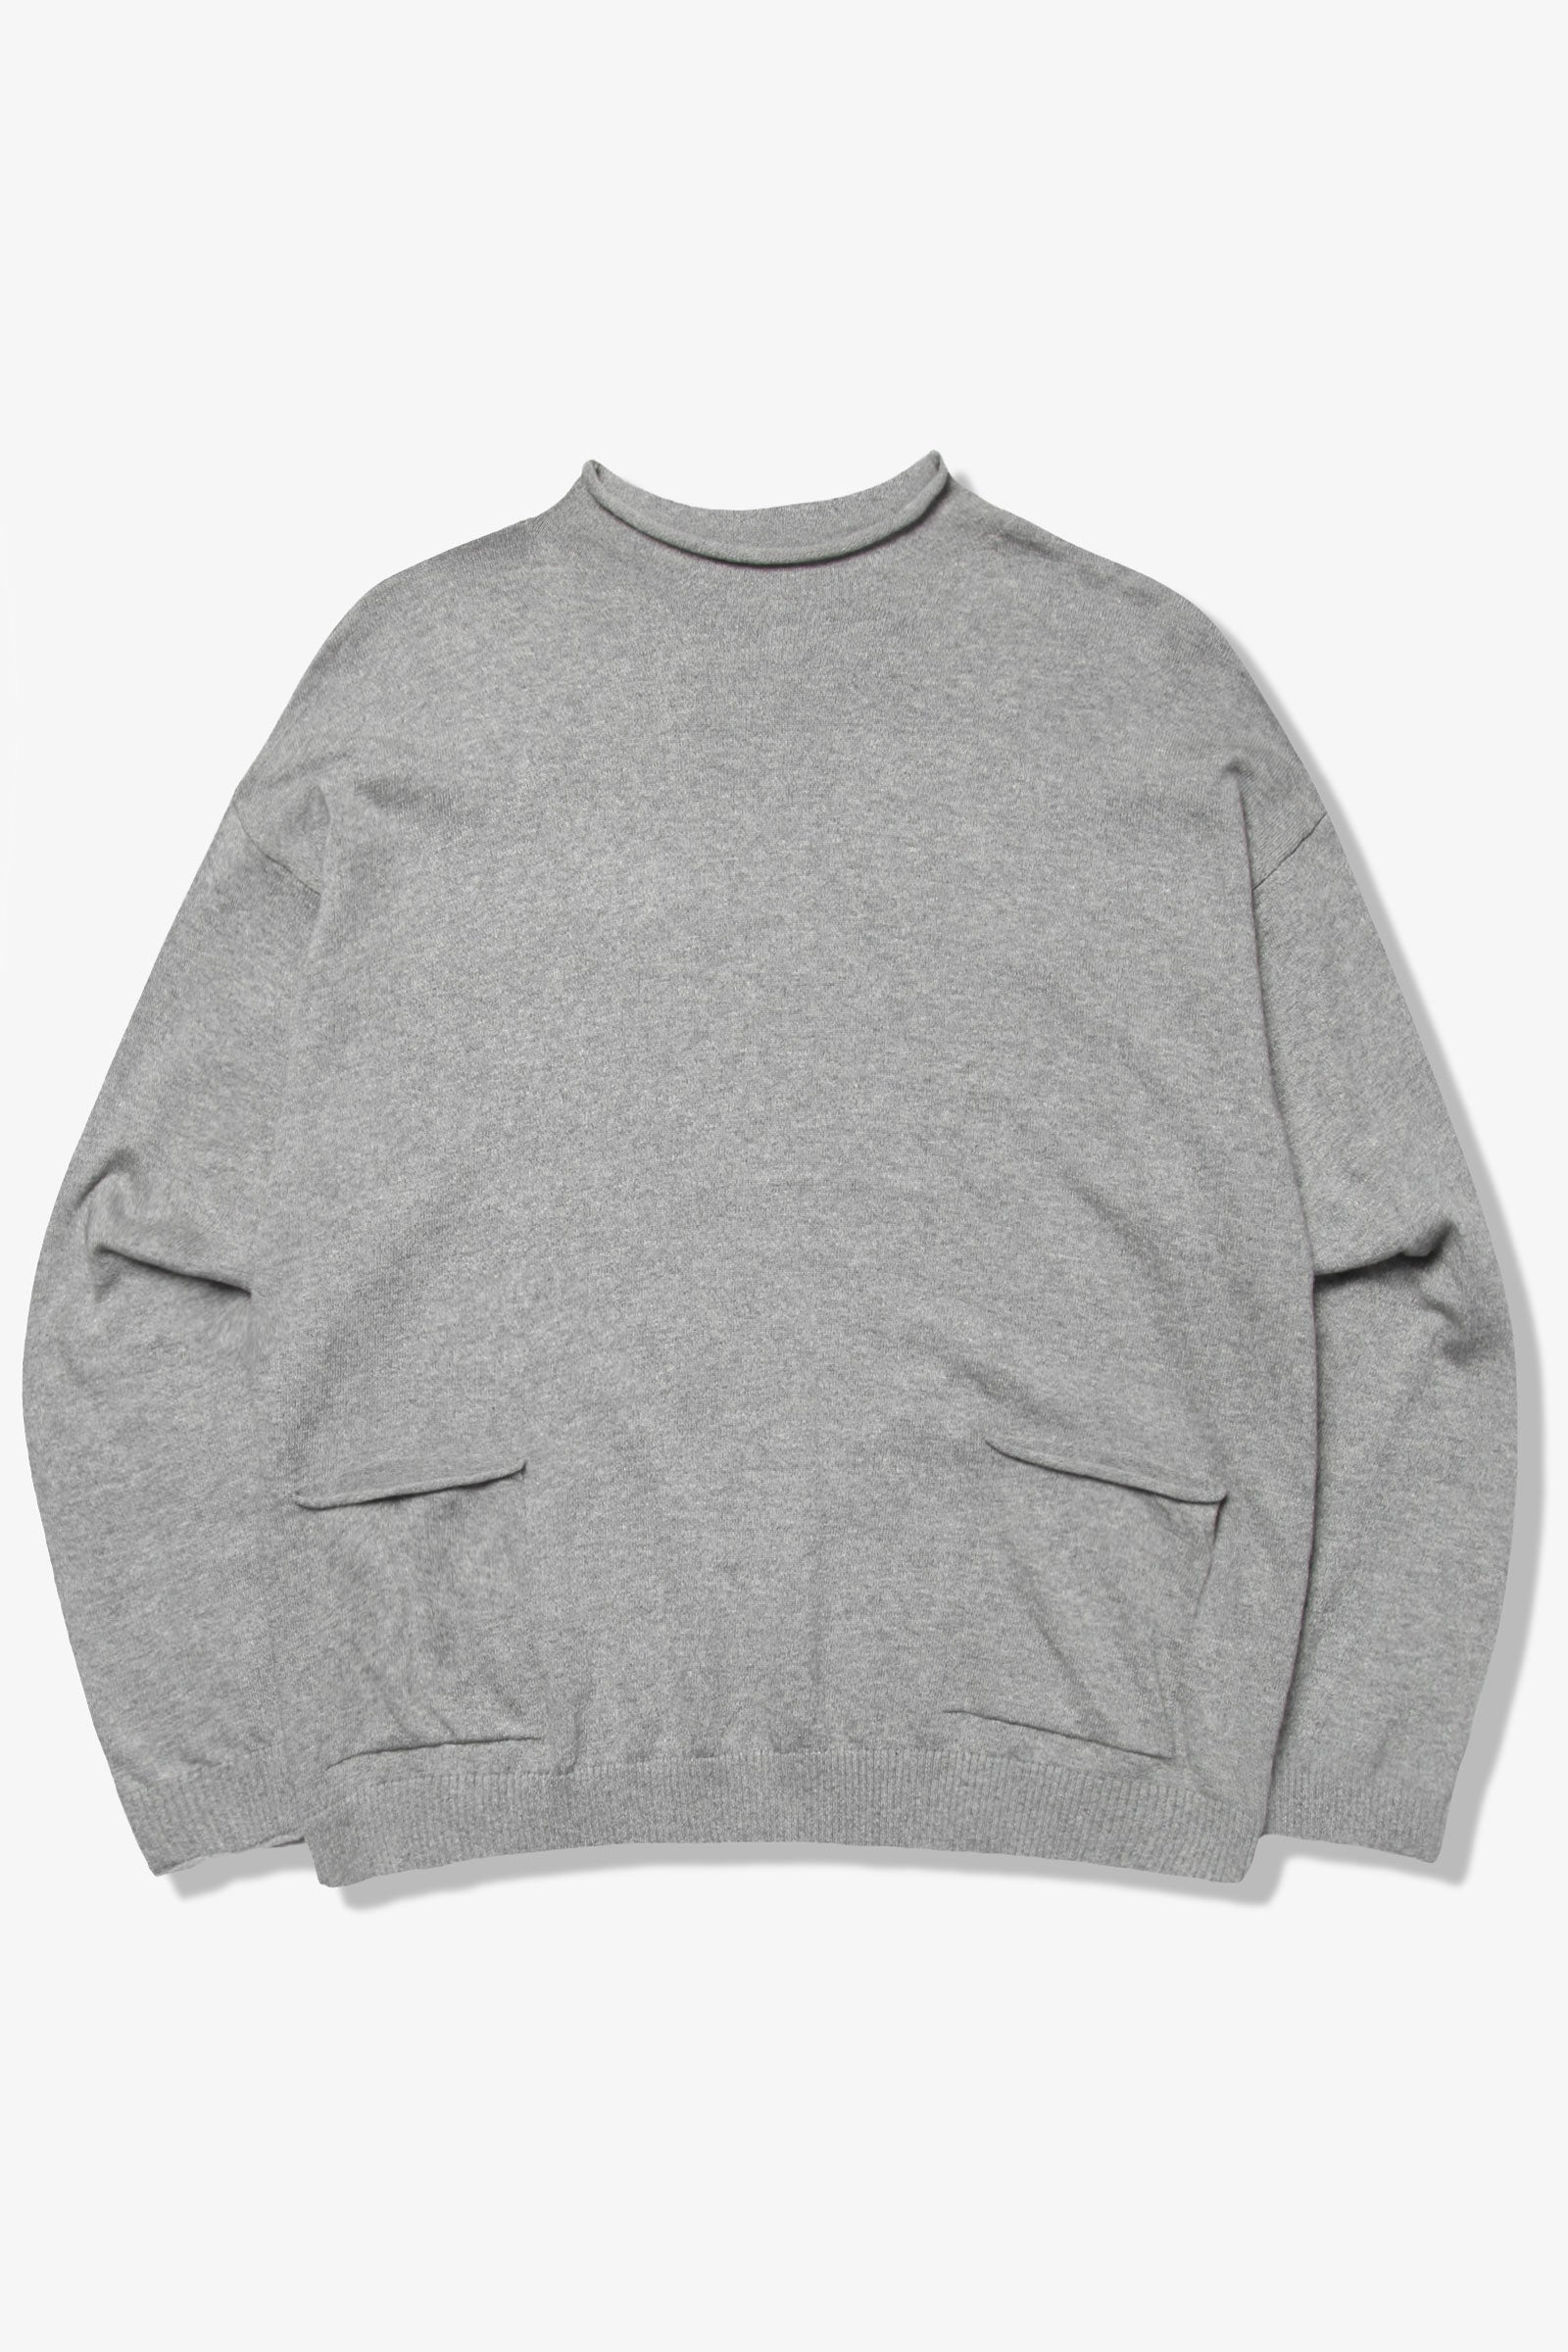 Blacksmith - Fishing Sweater - Grey